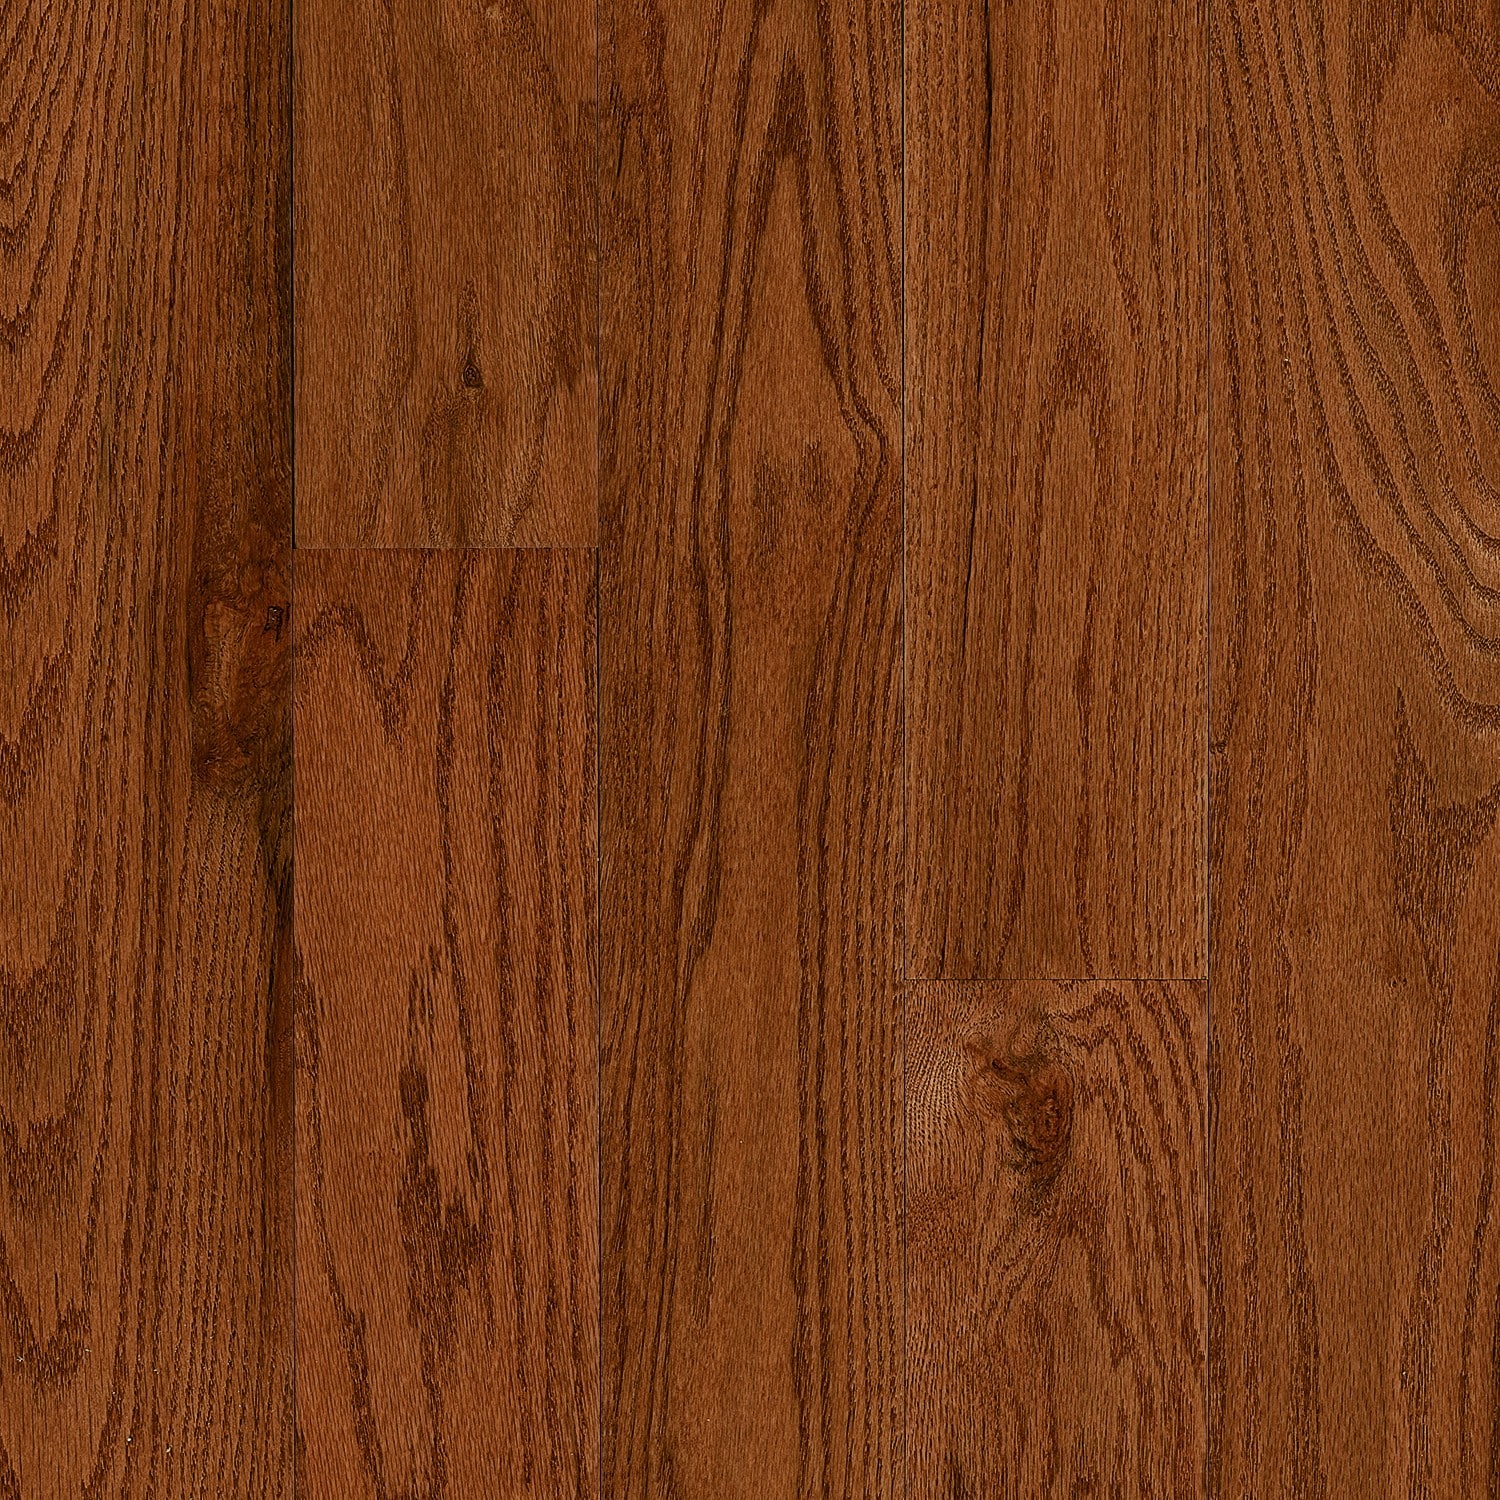 (Sample) Frisco Gunstock Oak 3/4-in solid Hardwood Flooring in Brown | - Bruce 731OLCB9521